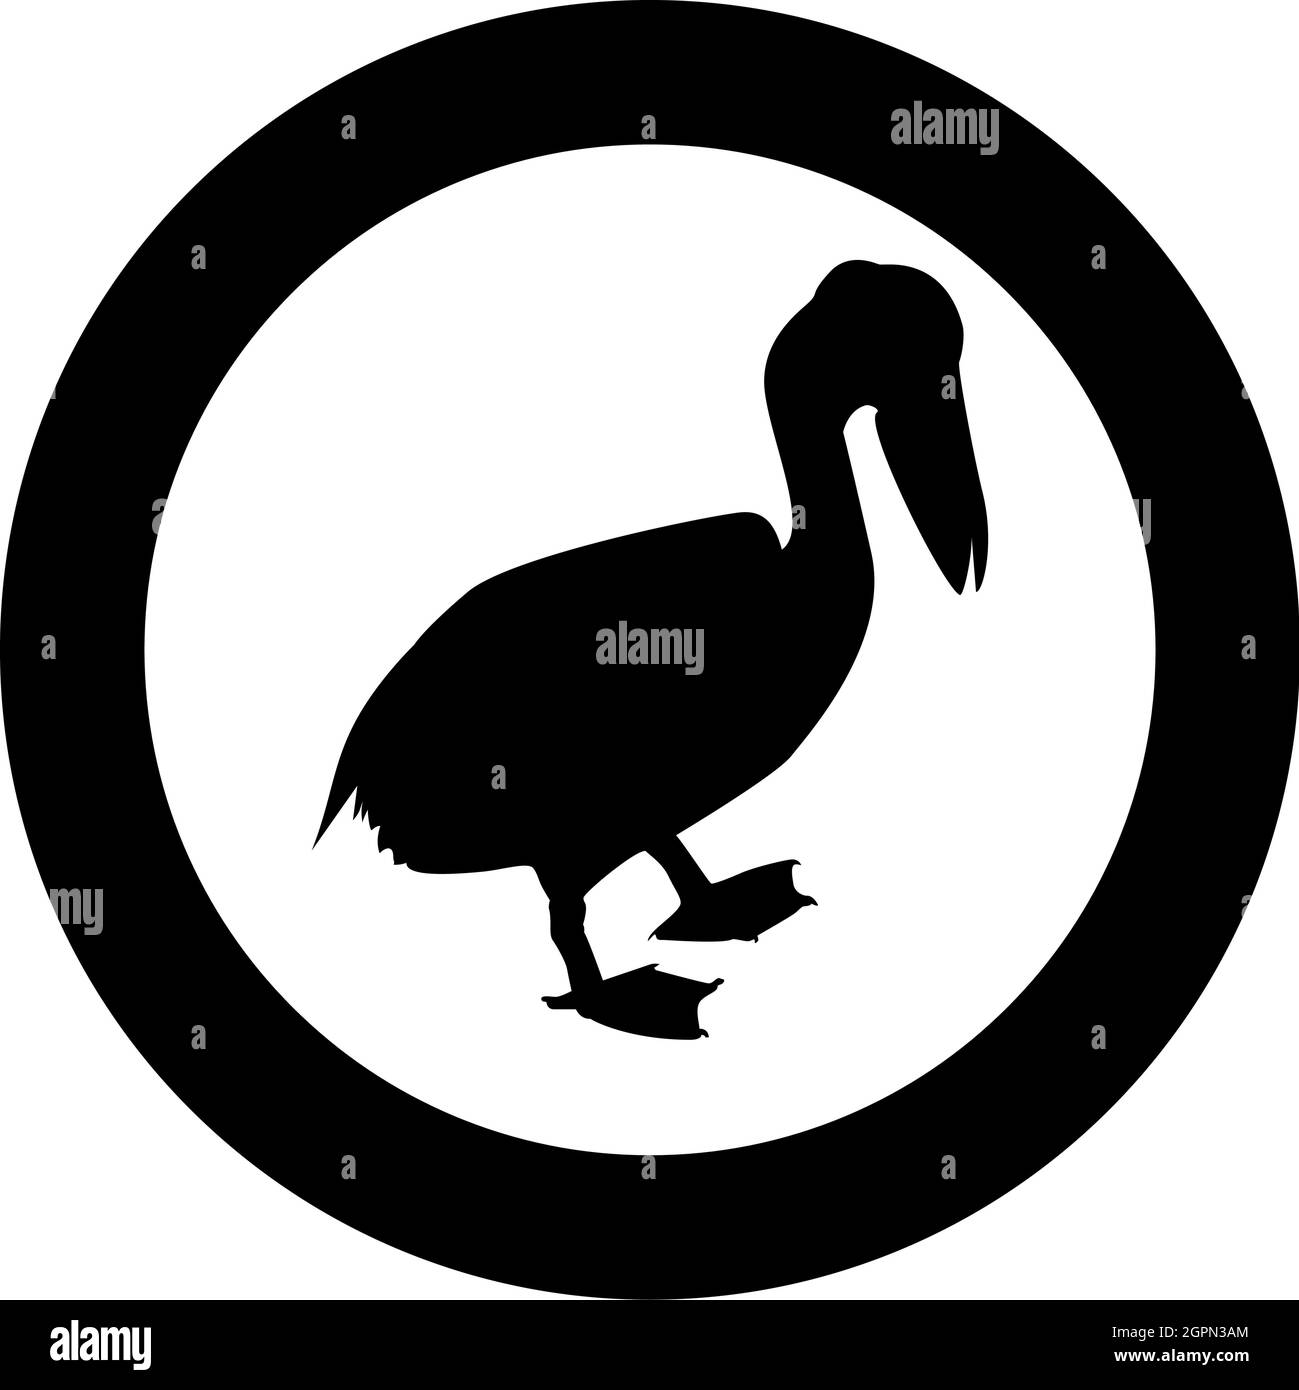 Pelican Vogel Seabird Wasservögel Silhouette im Kreis rund schwarz Farbe Vektor Illustration solide Kontur Stil Bild Stock Vektor